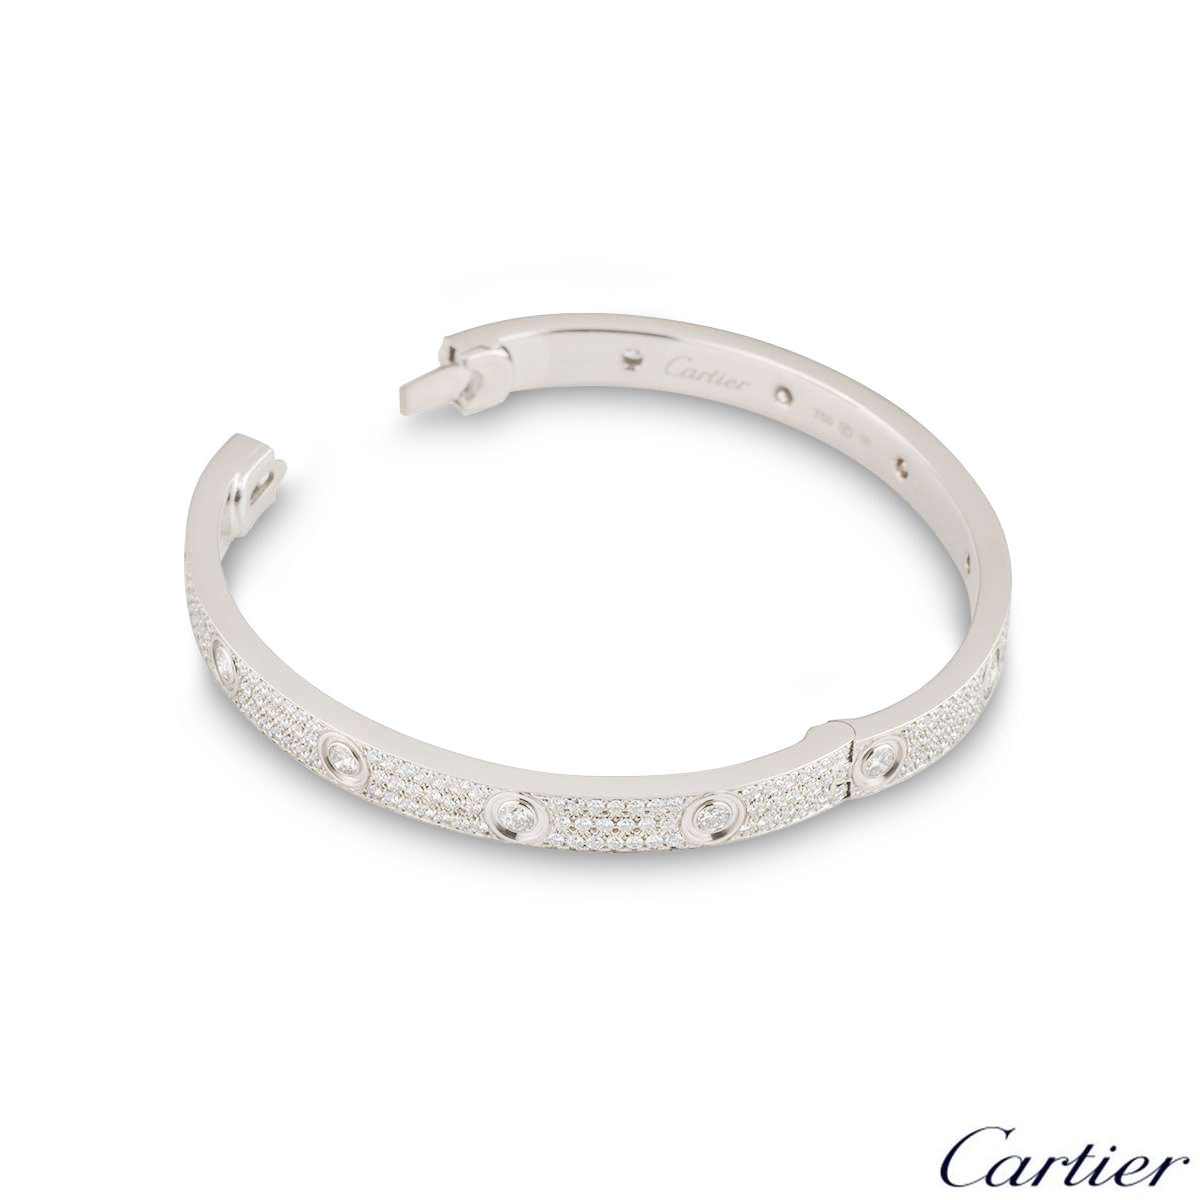 Cartier White Gold Pave Diamond Love Bracelet Size 17 N6033602